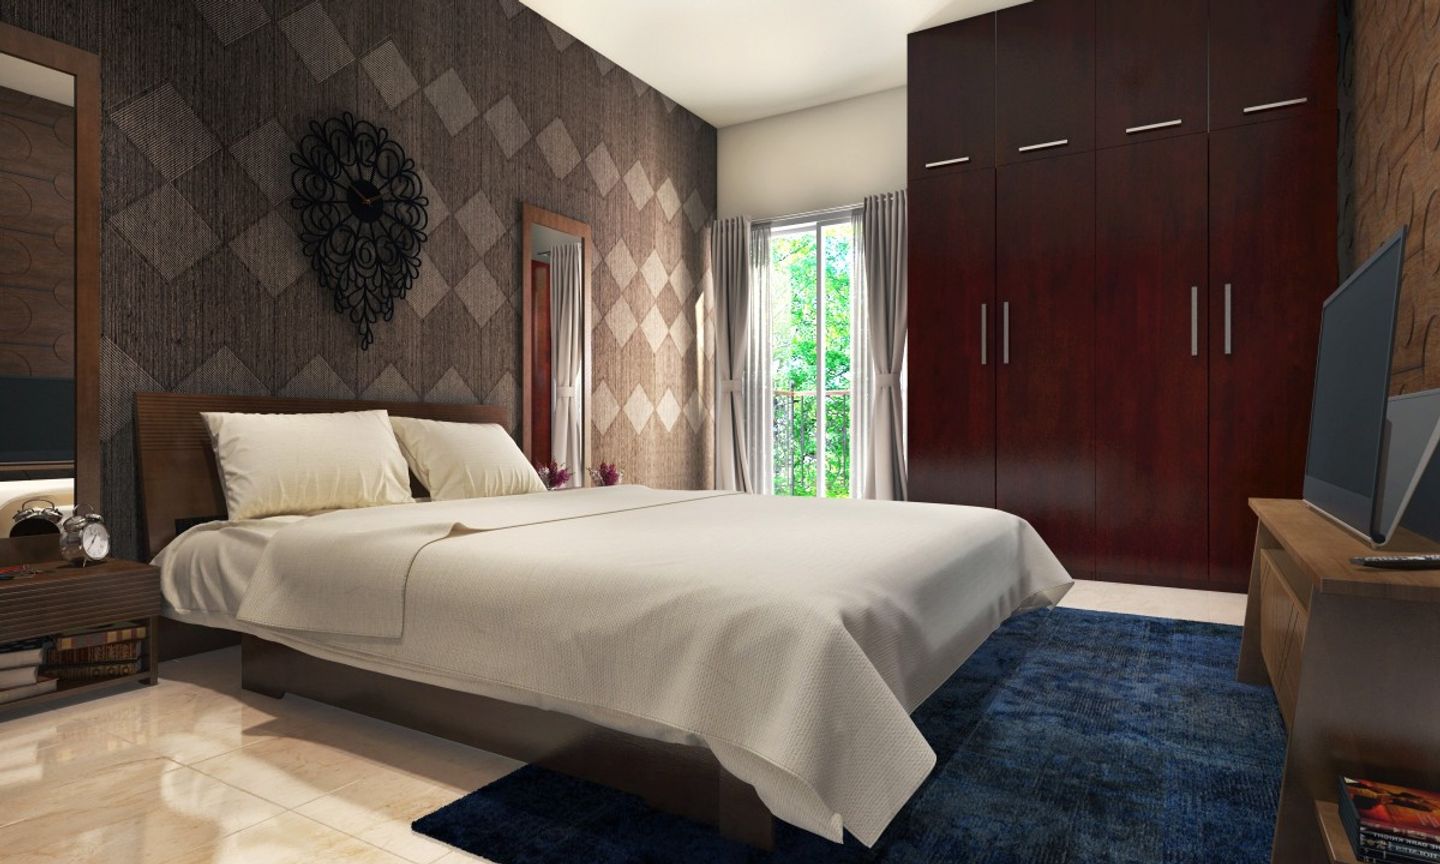 Classic Brown Bedroom Design With Wallpaper